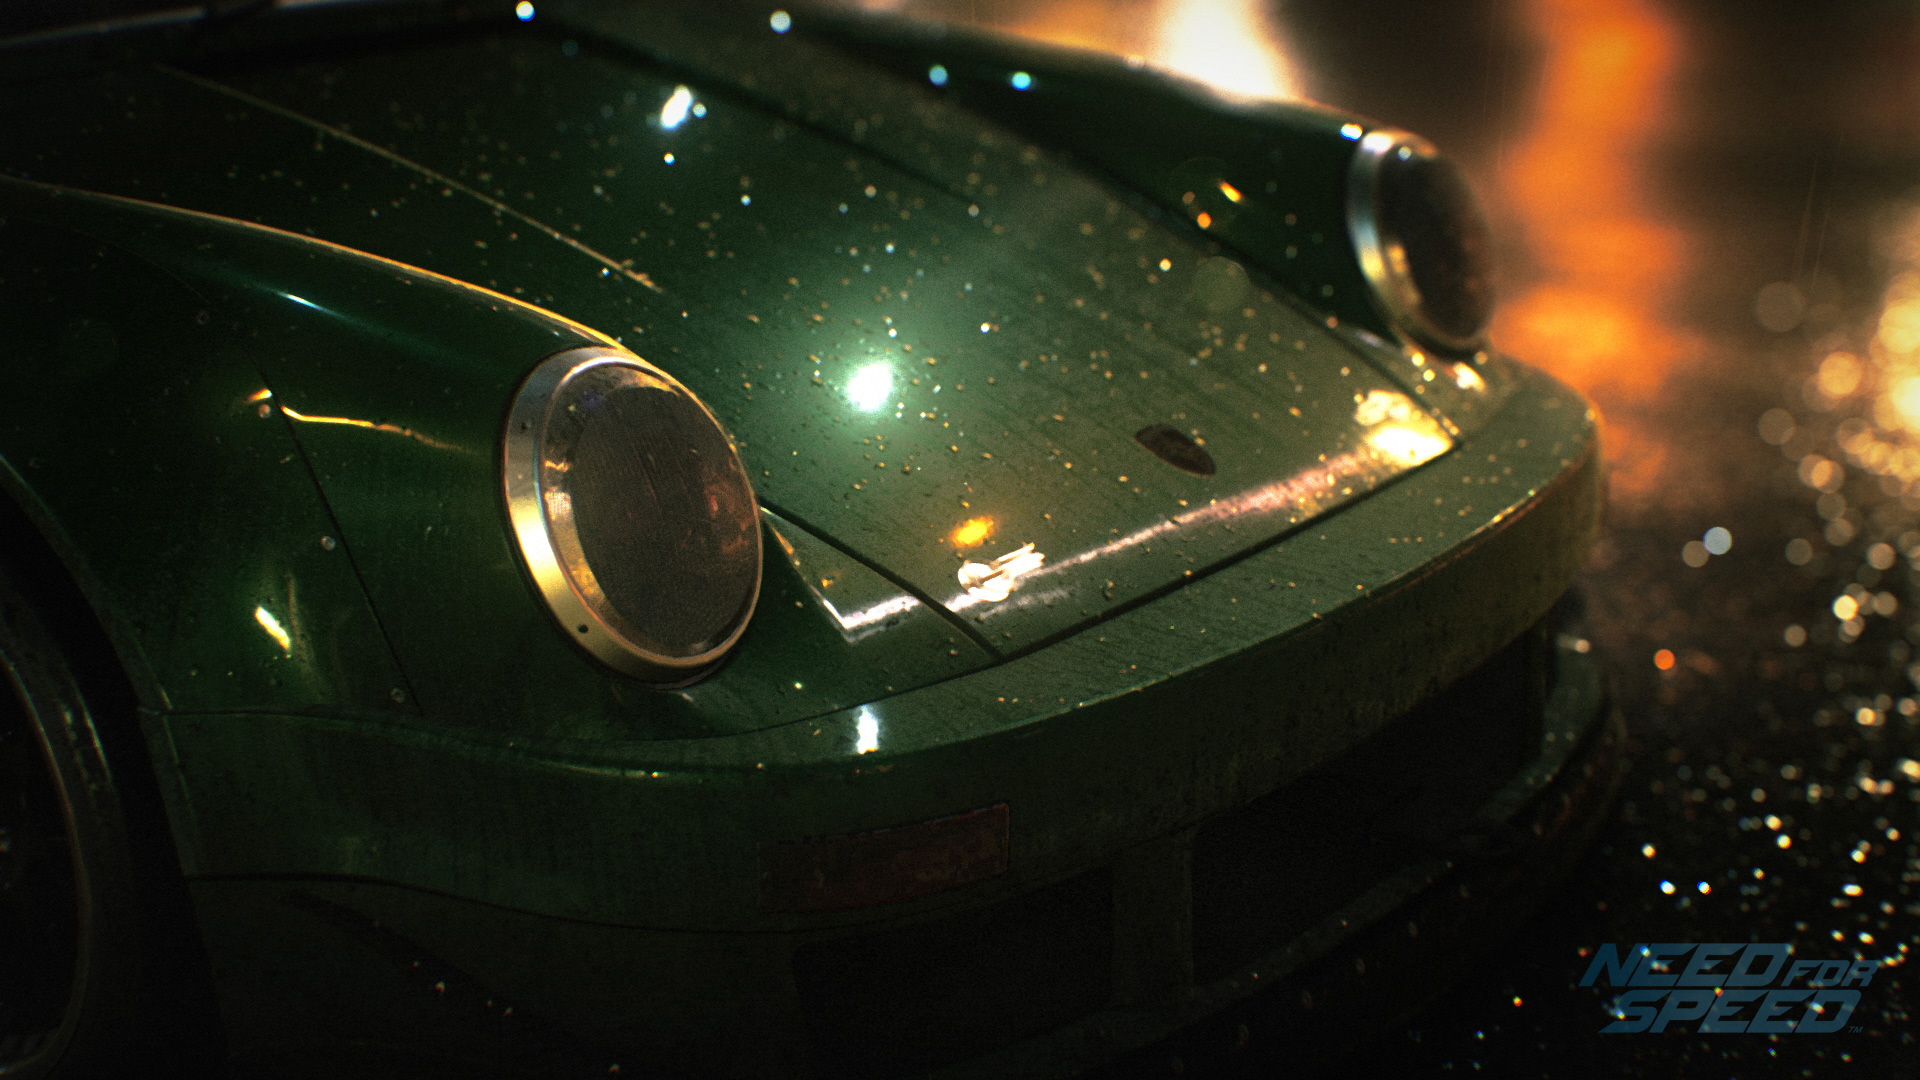 Need for Speed 2015 Screenshot